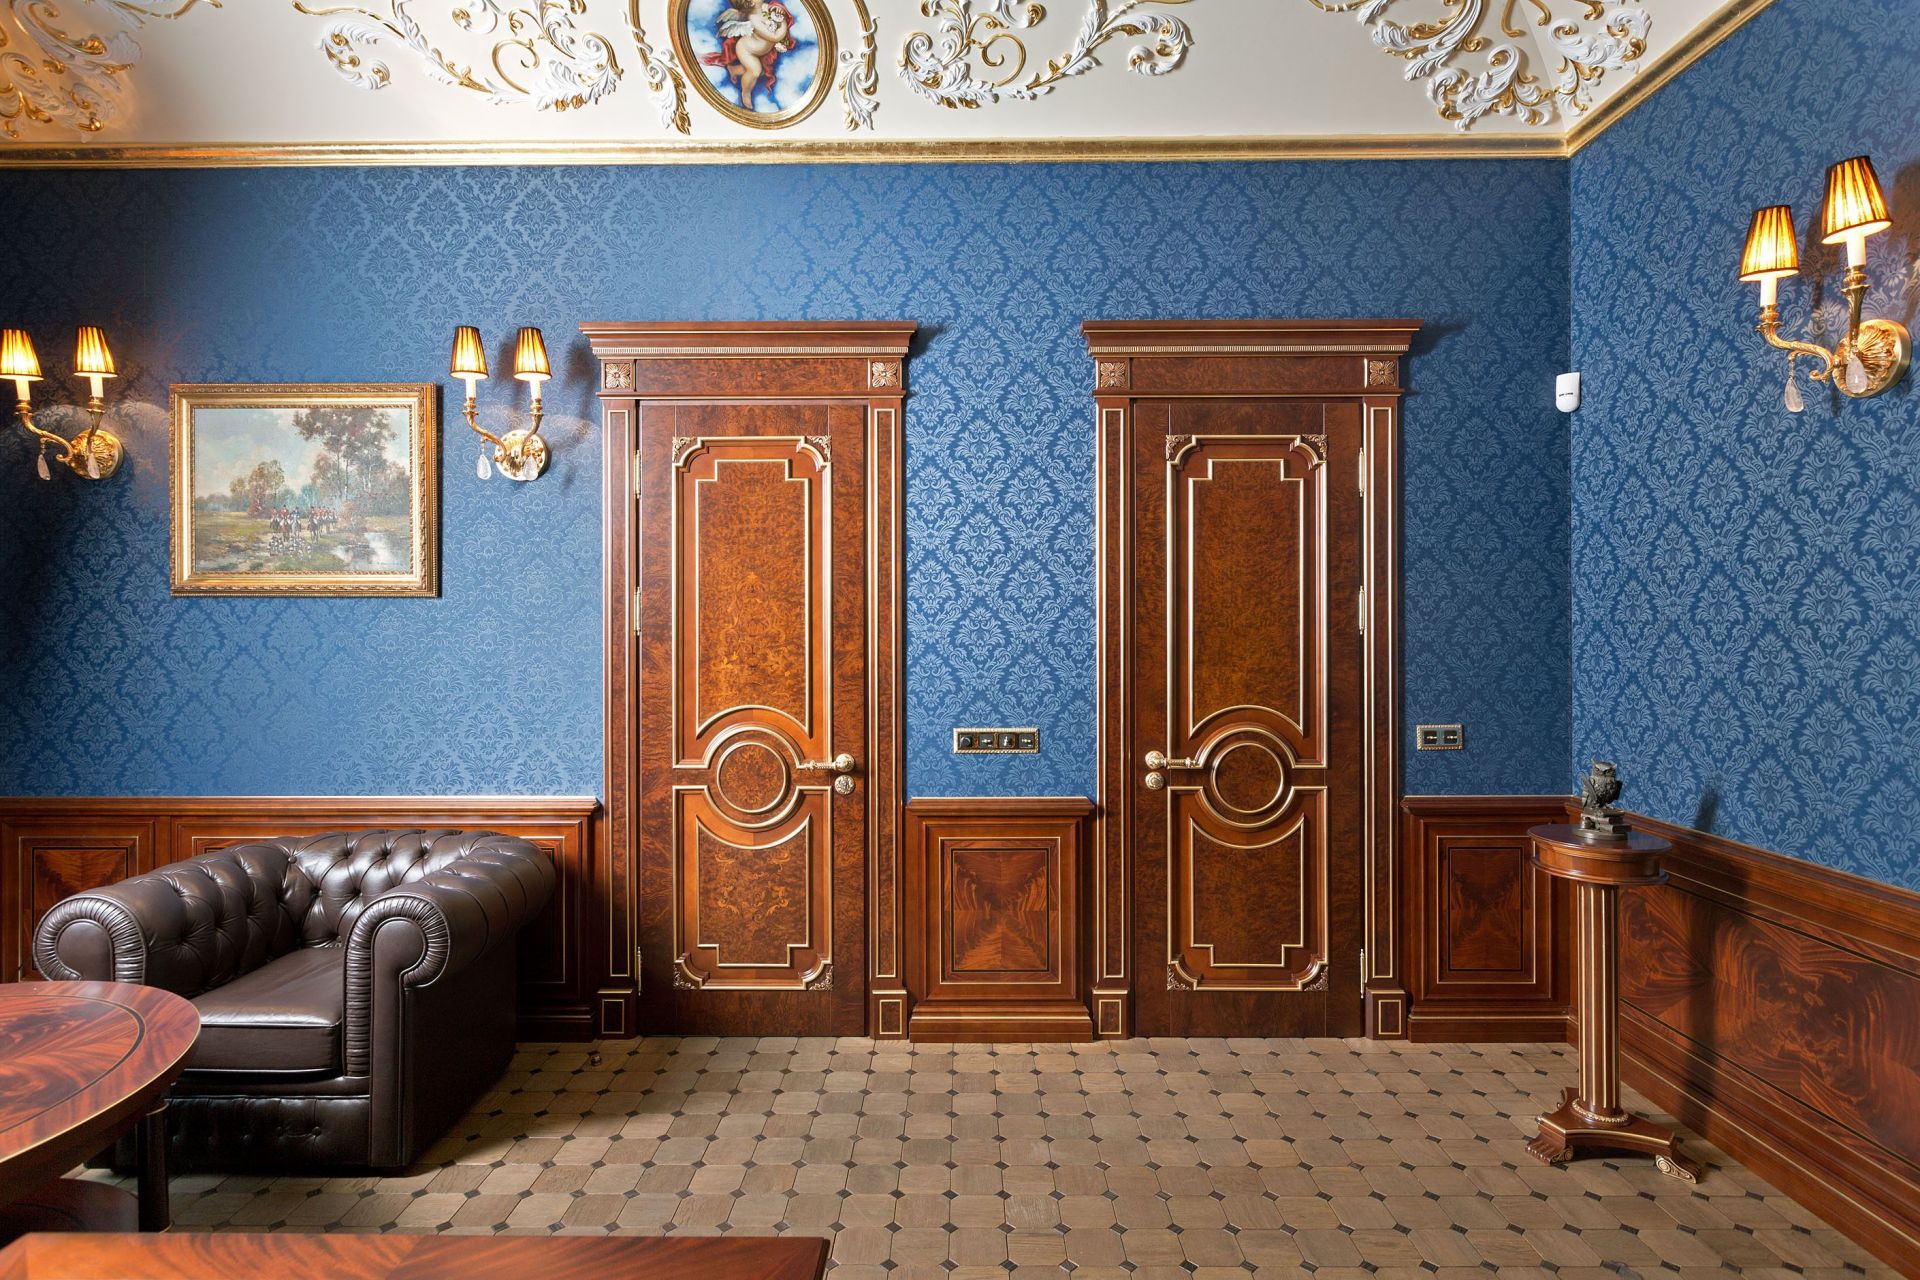 Study interior with baroque elements